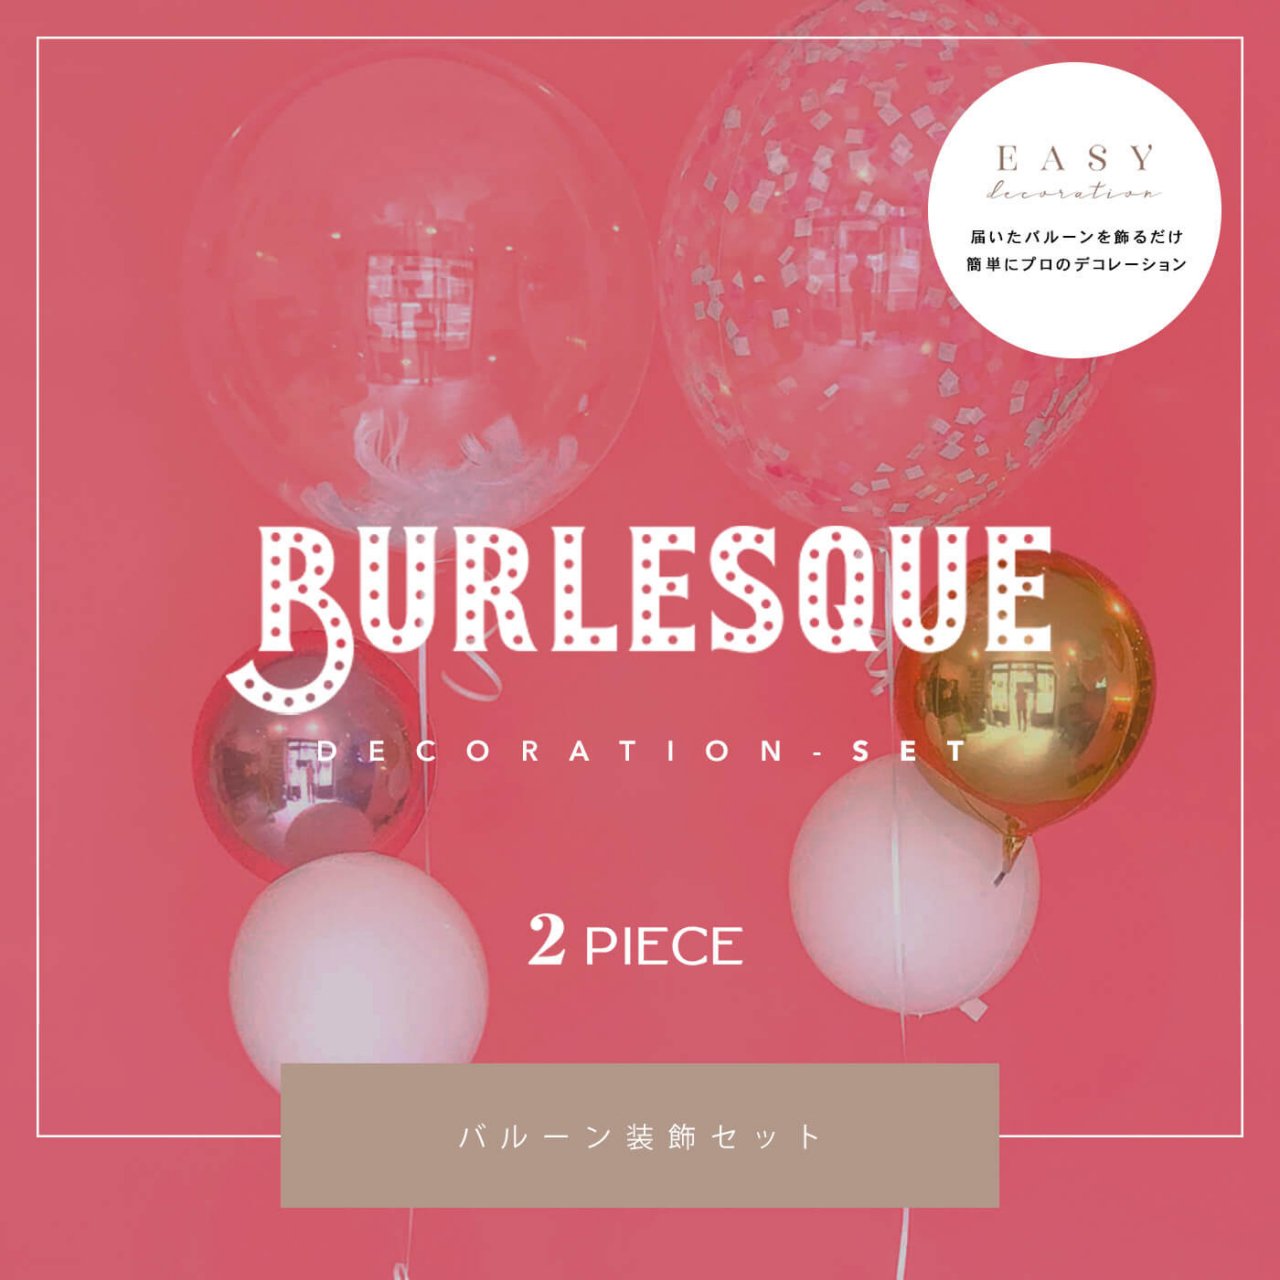 Burlesque Decoration 2set - Easy Decoration - 届いて飾るだけのイージーデコレーション